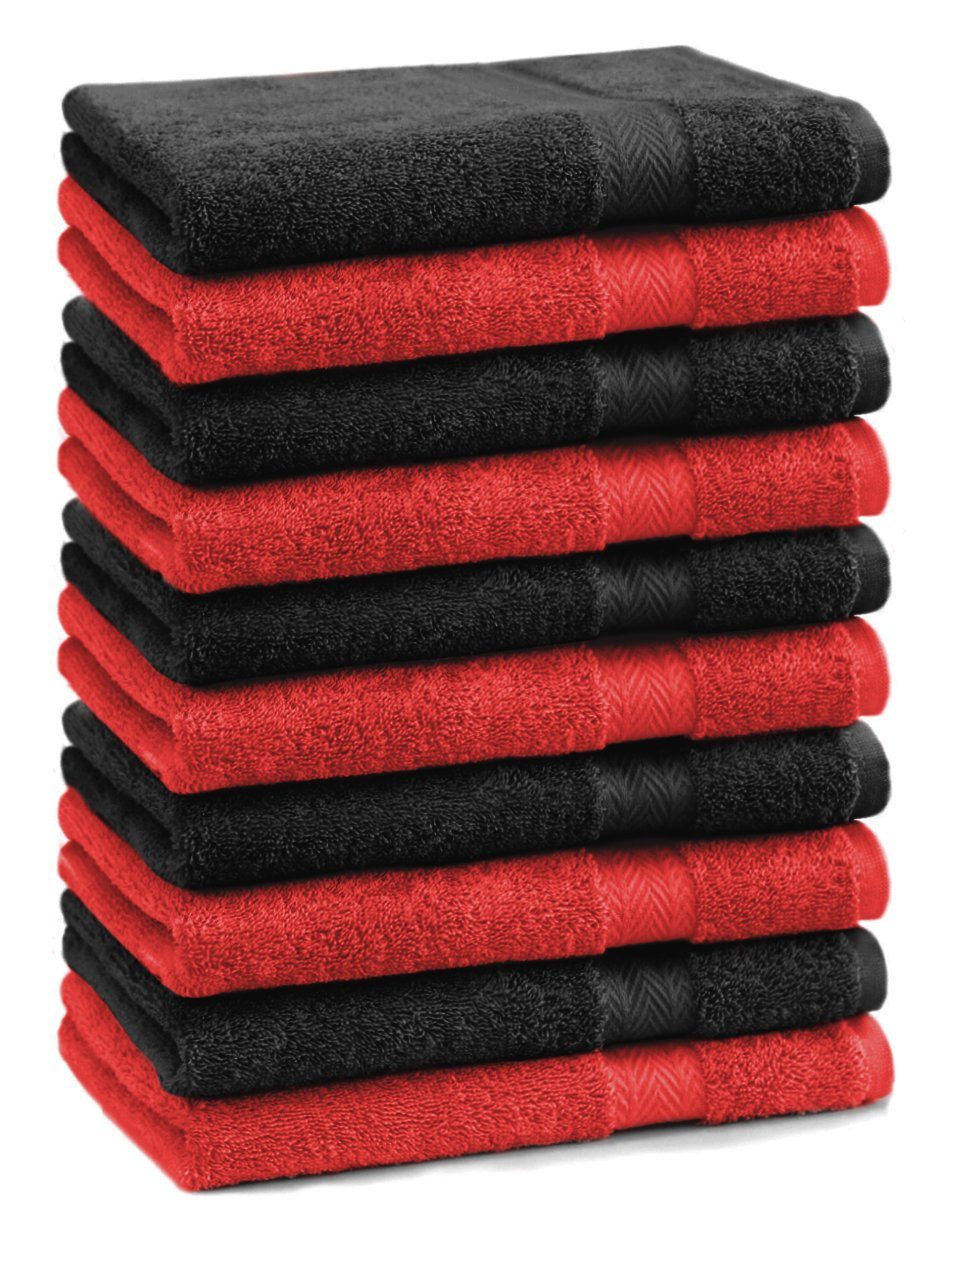 Betz Gästehandtücher 10 Stück Gästehandtücher Premium 100% Baumwolle Gästetuch-Set 30x50 cm Farbe rot und schwarz, 100% Baumwolle | Gästehandtücher